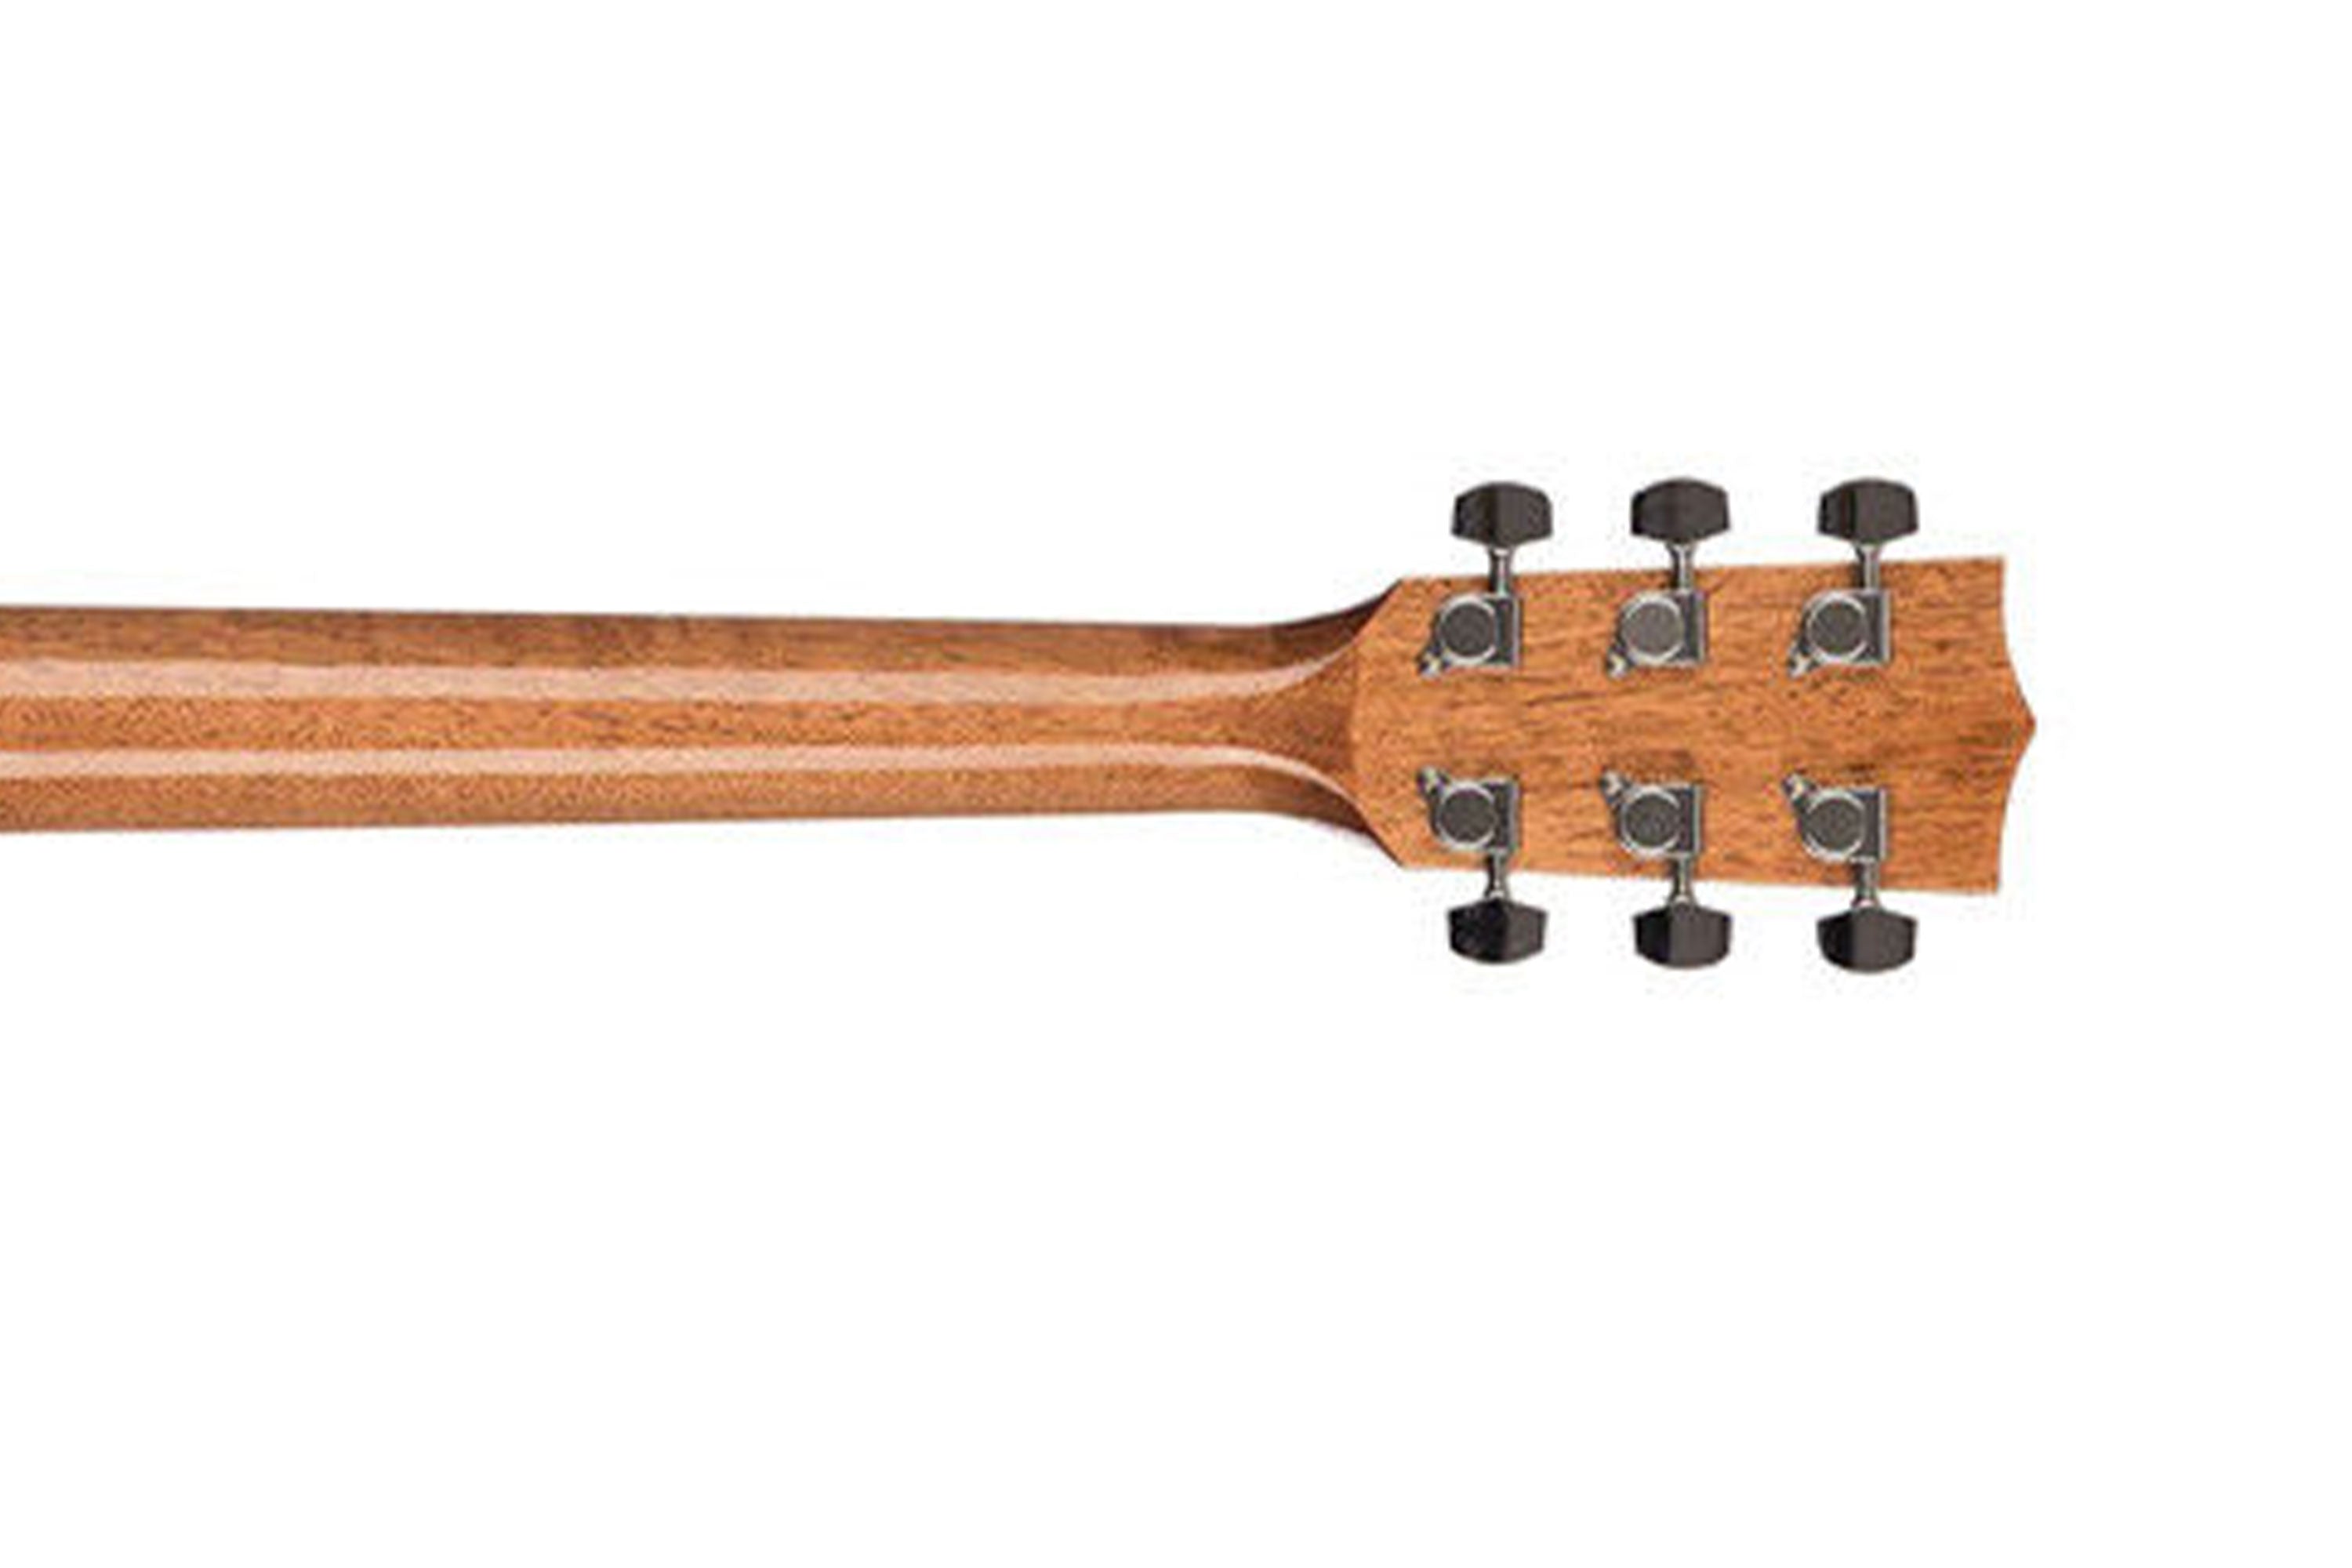 Kala GTR-MTS-E Solid Mahogany Thinline Steel Guitar